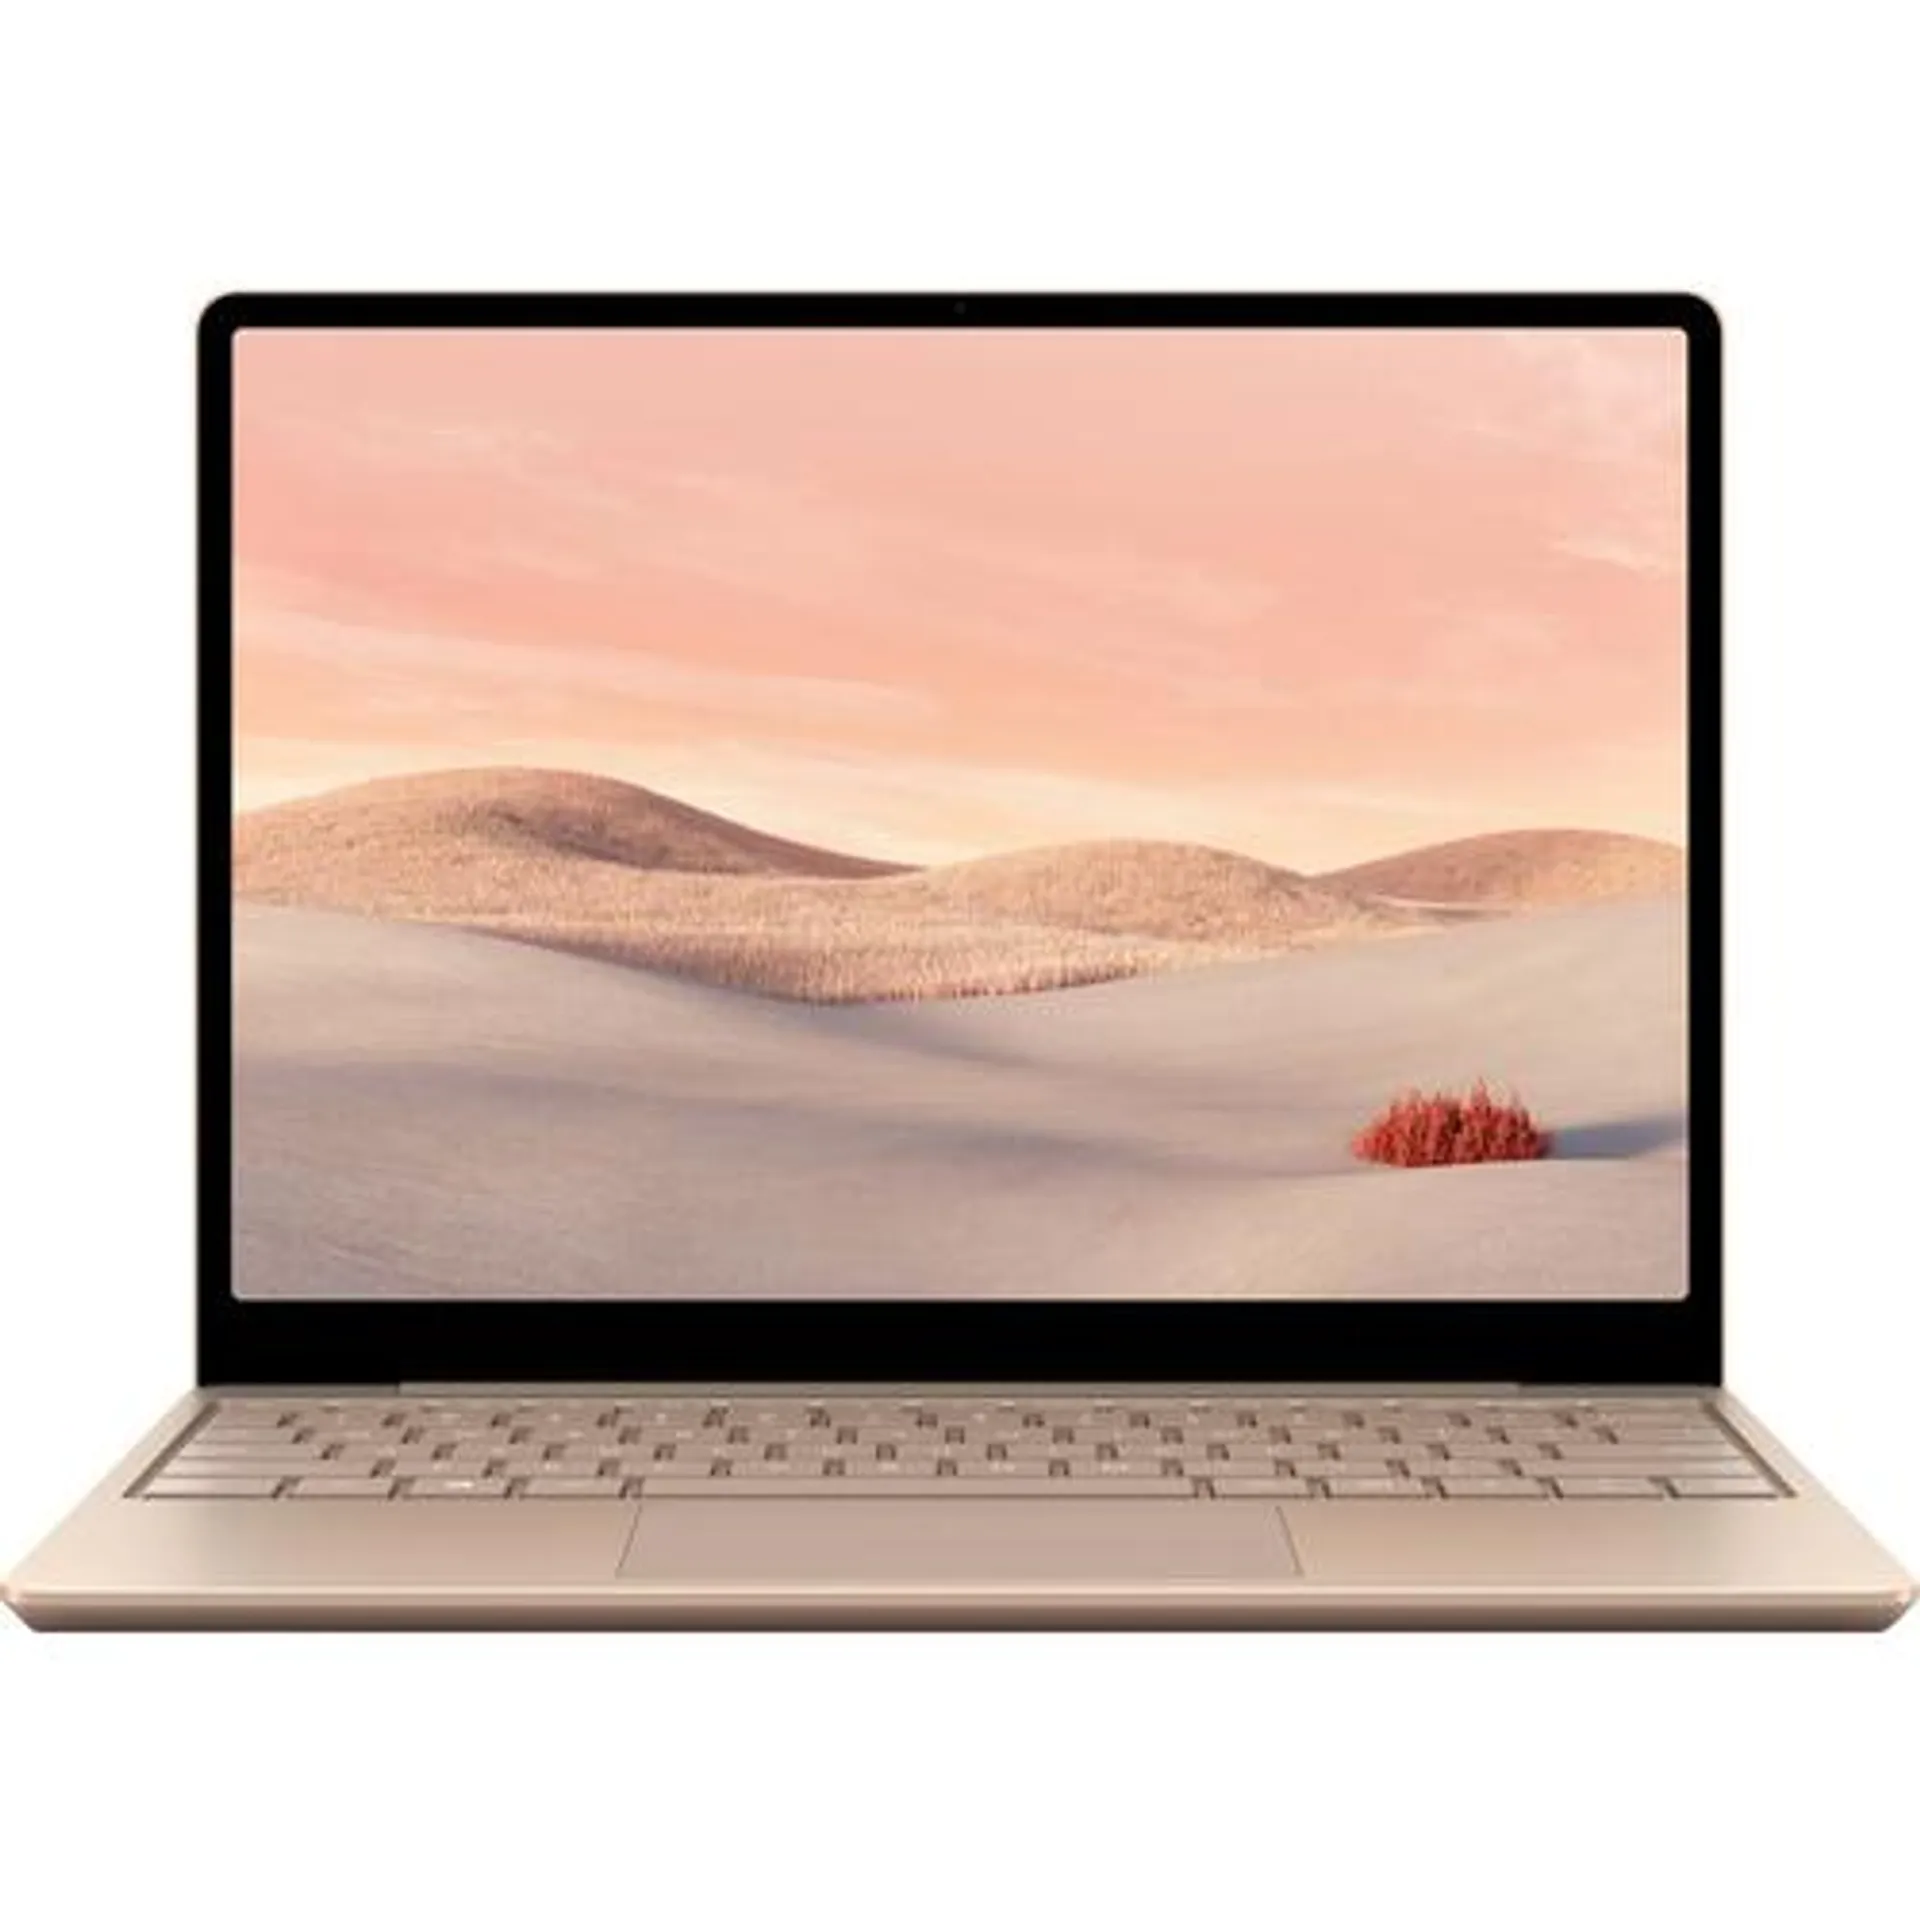 Microsoft Surface Laptop Go 12.4" Intel i5-1035G1 8GB/256GB Touchscreen, Sandstone